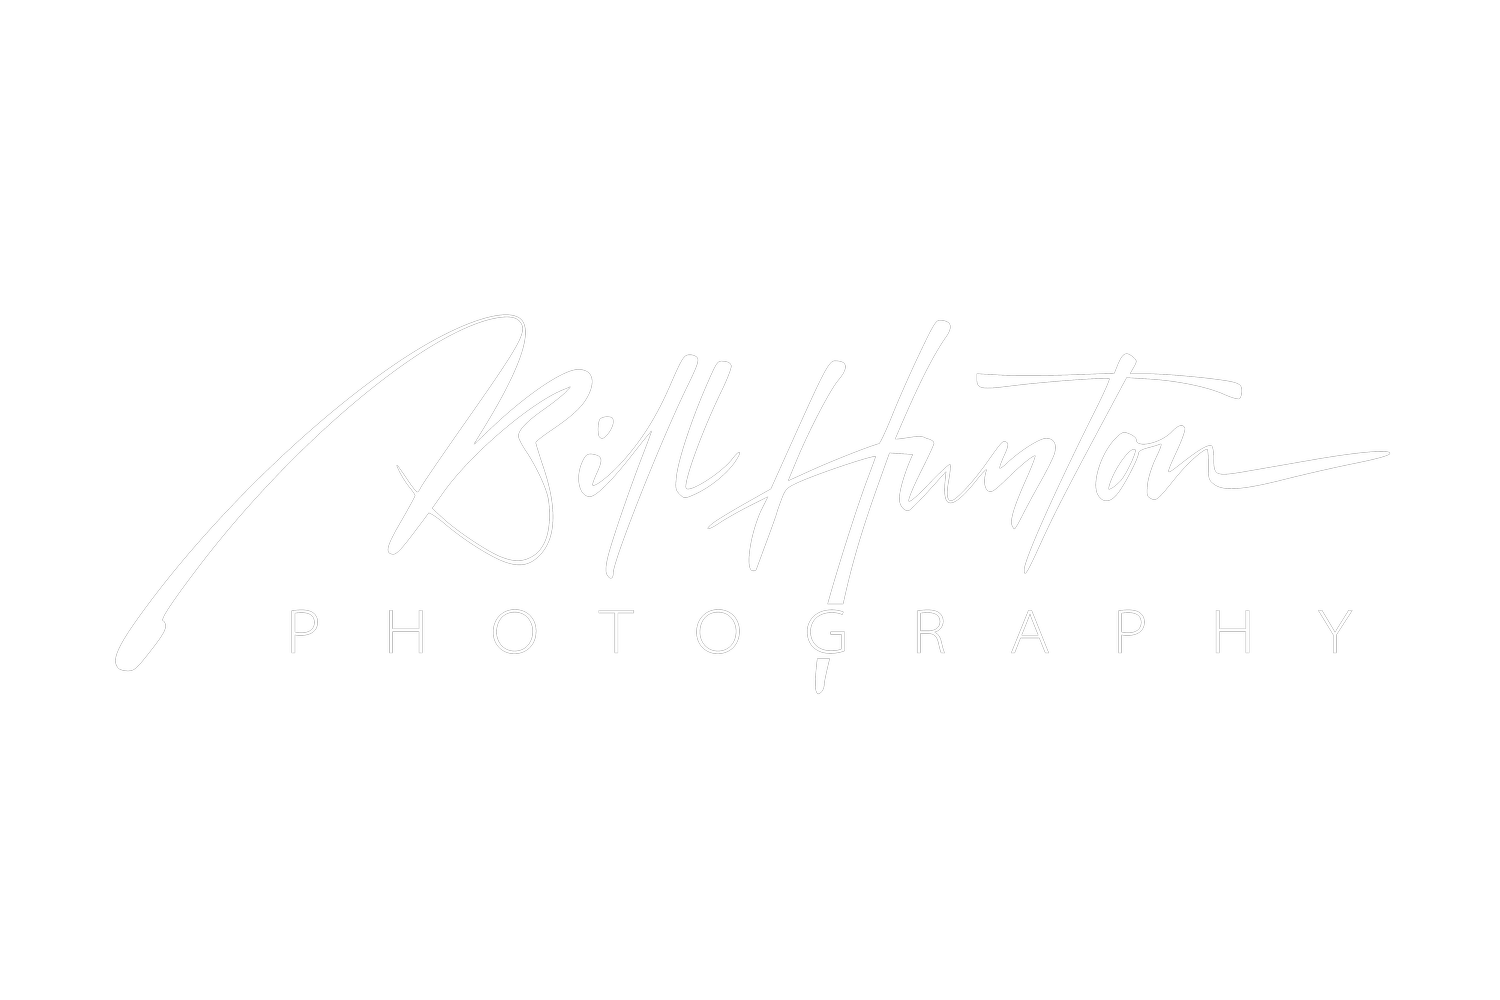 Bill Hunton Photography